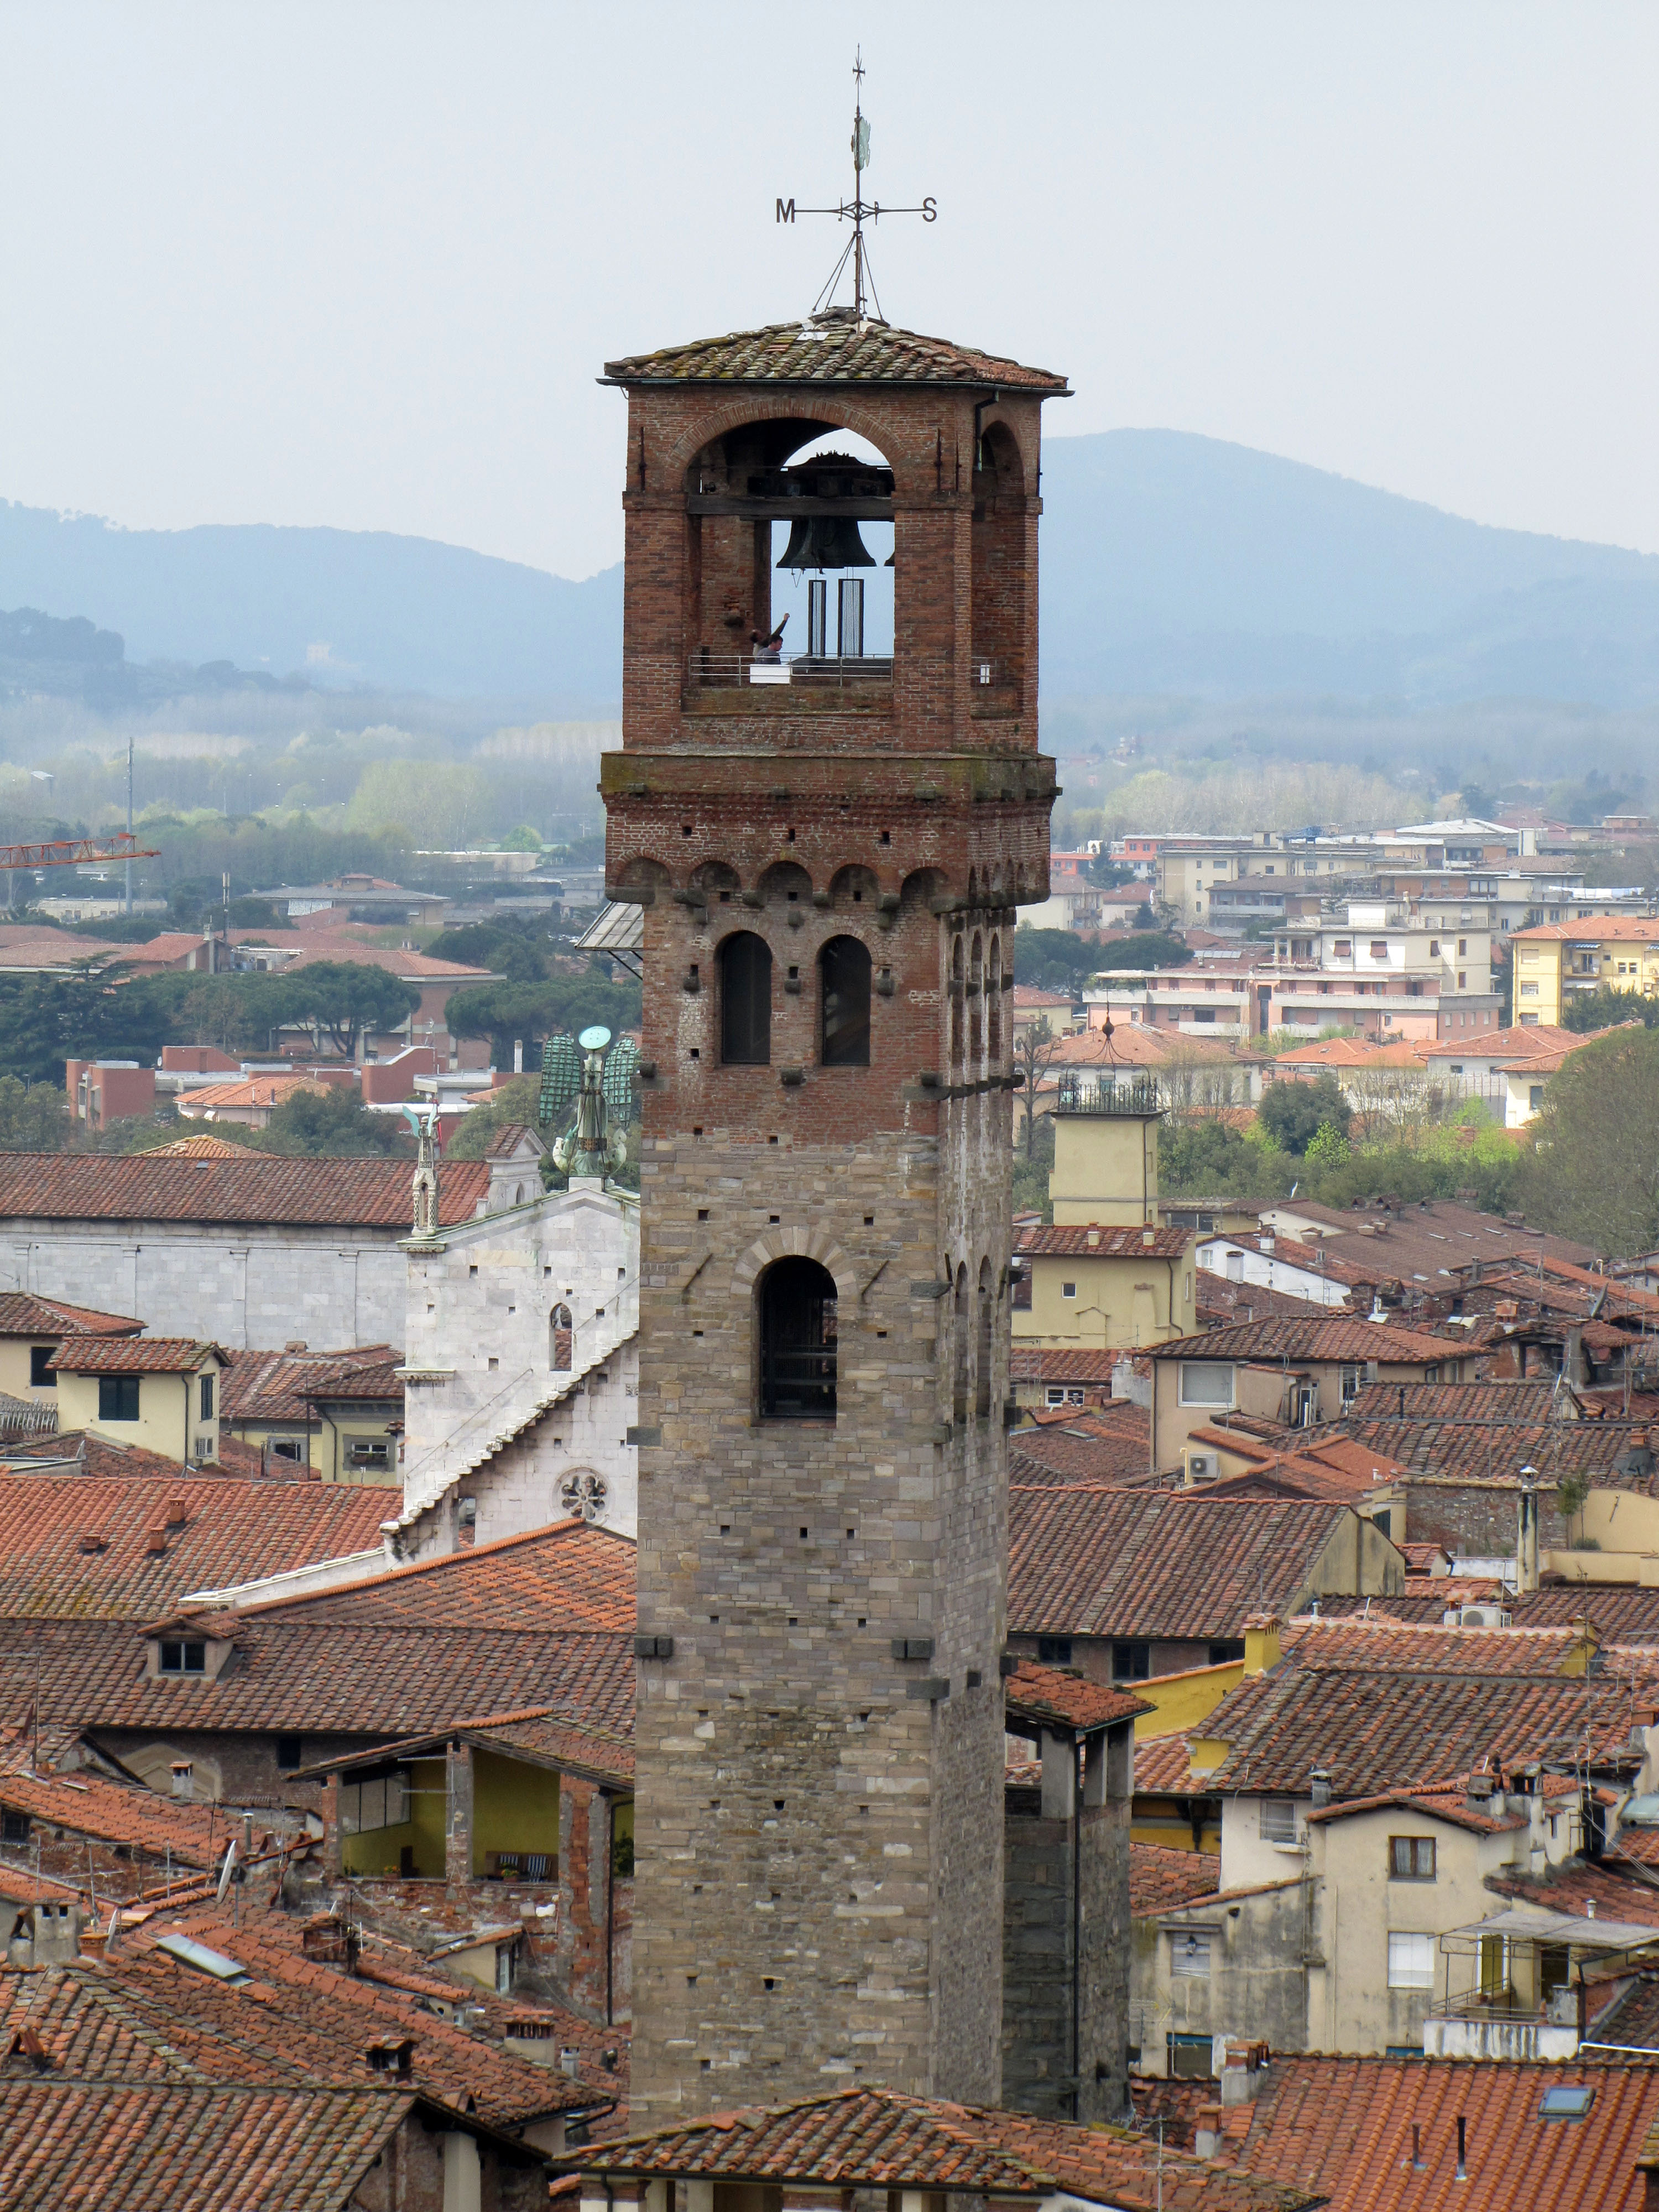 File:Torre dell'Orologio, Lucca.jpg - Wikimedia Commons